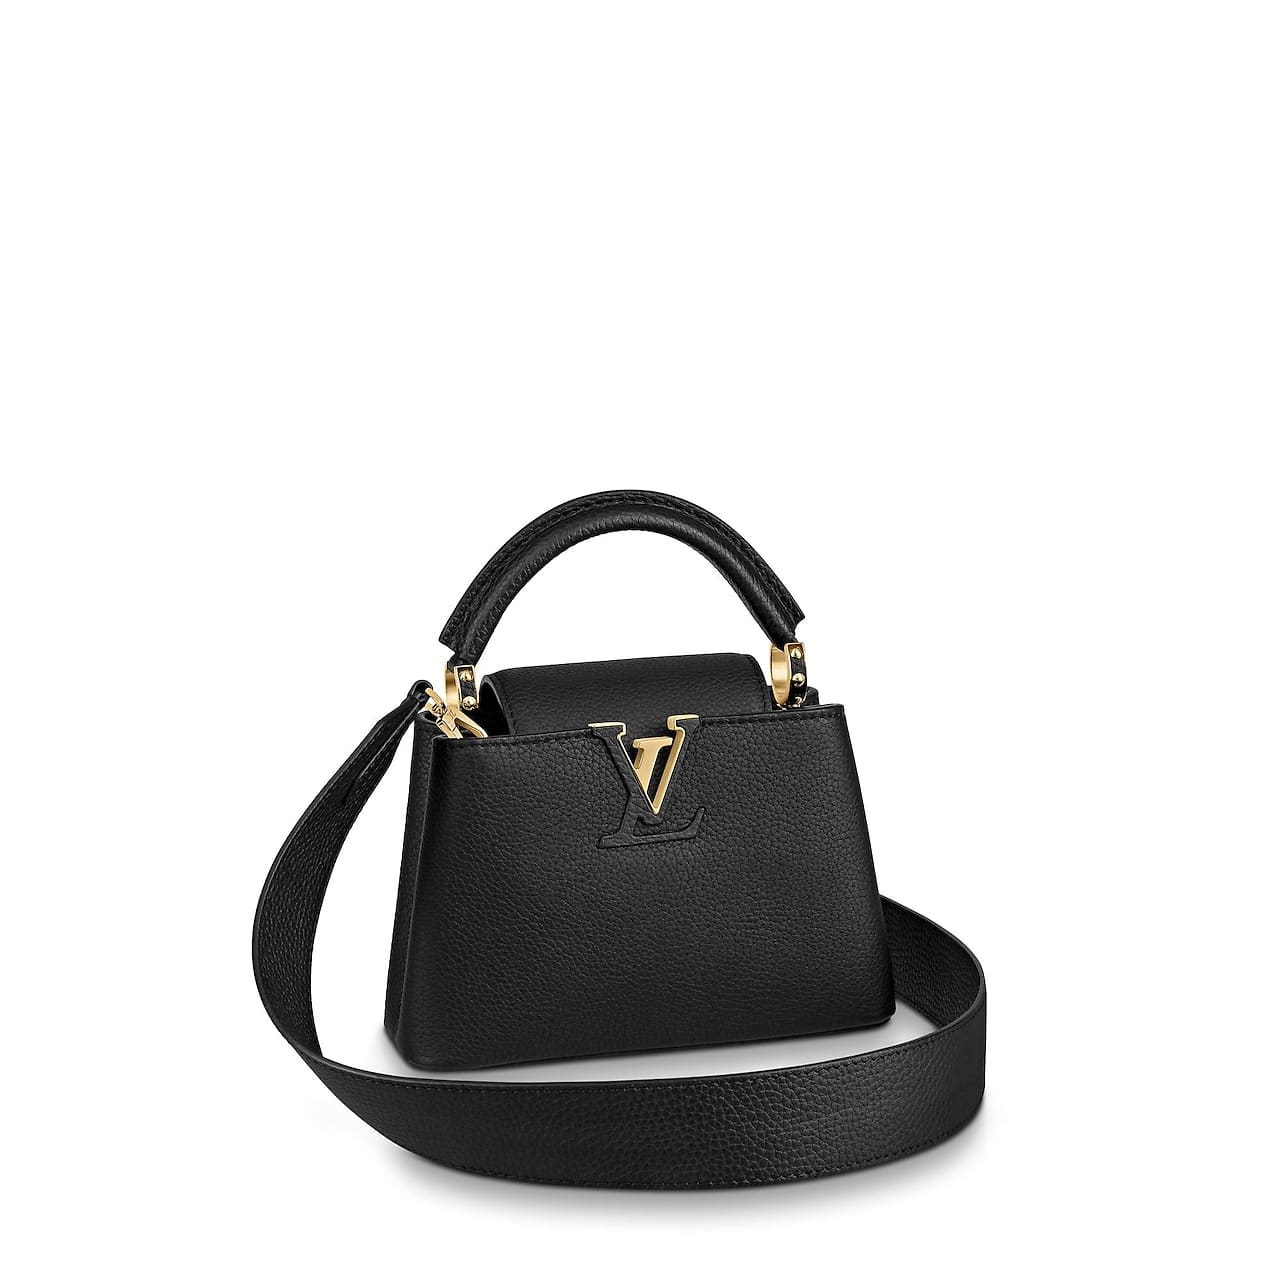 Shop 2021AW, 2021SS, Since 1854 and more Louis Vuitton New Handbags at  Vogue Bags Store Louis Vuitt…